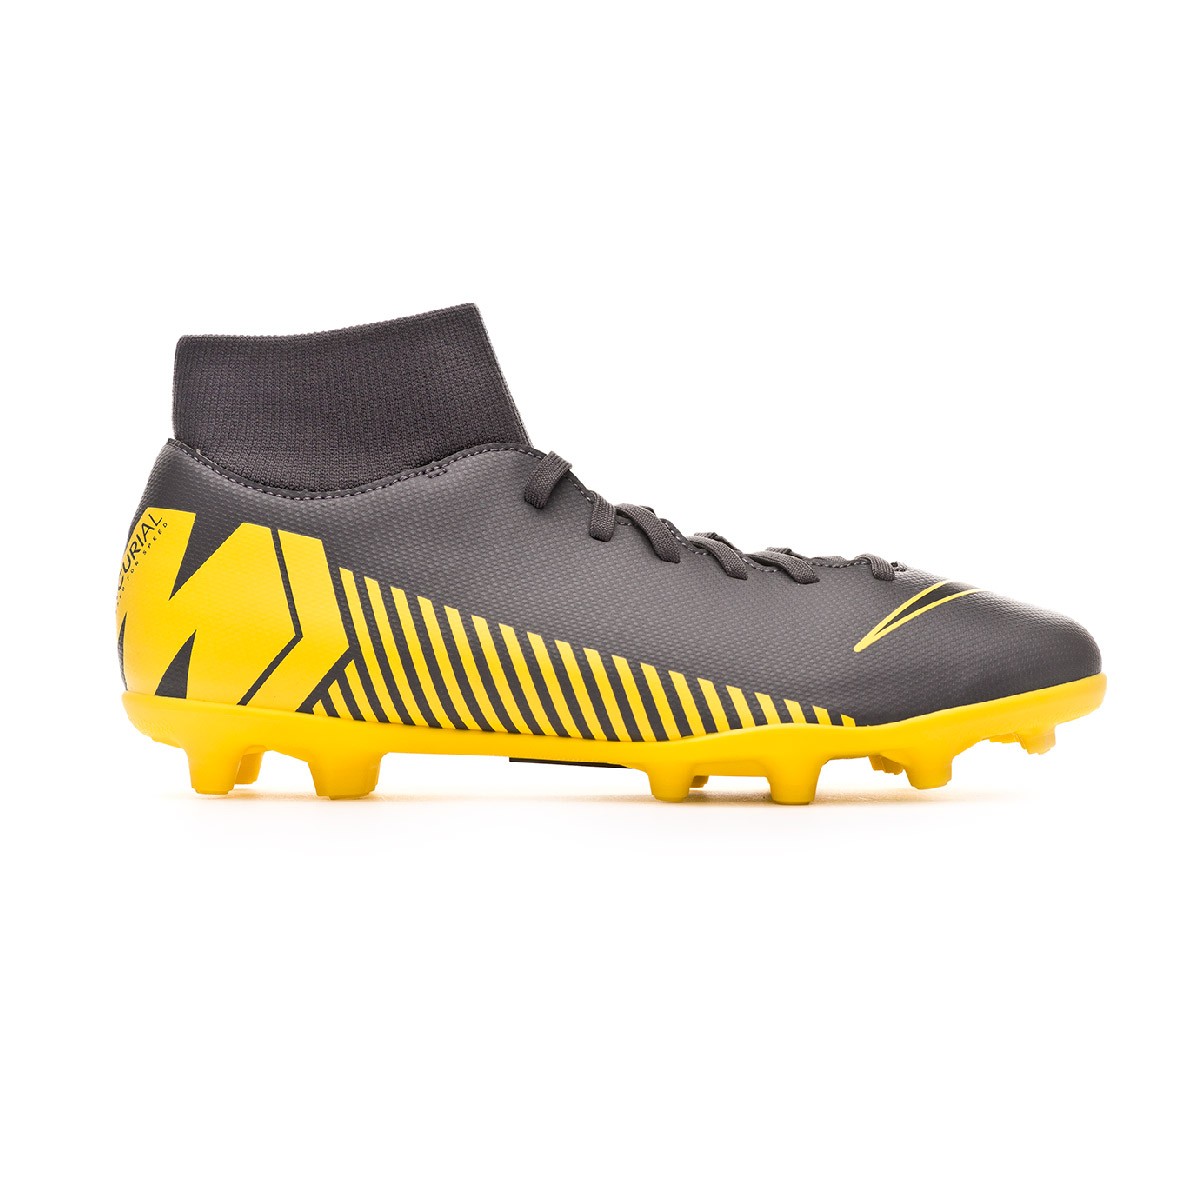 ronaldo yellow boots